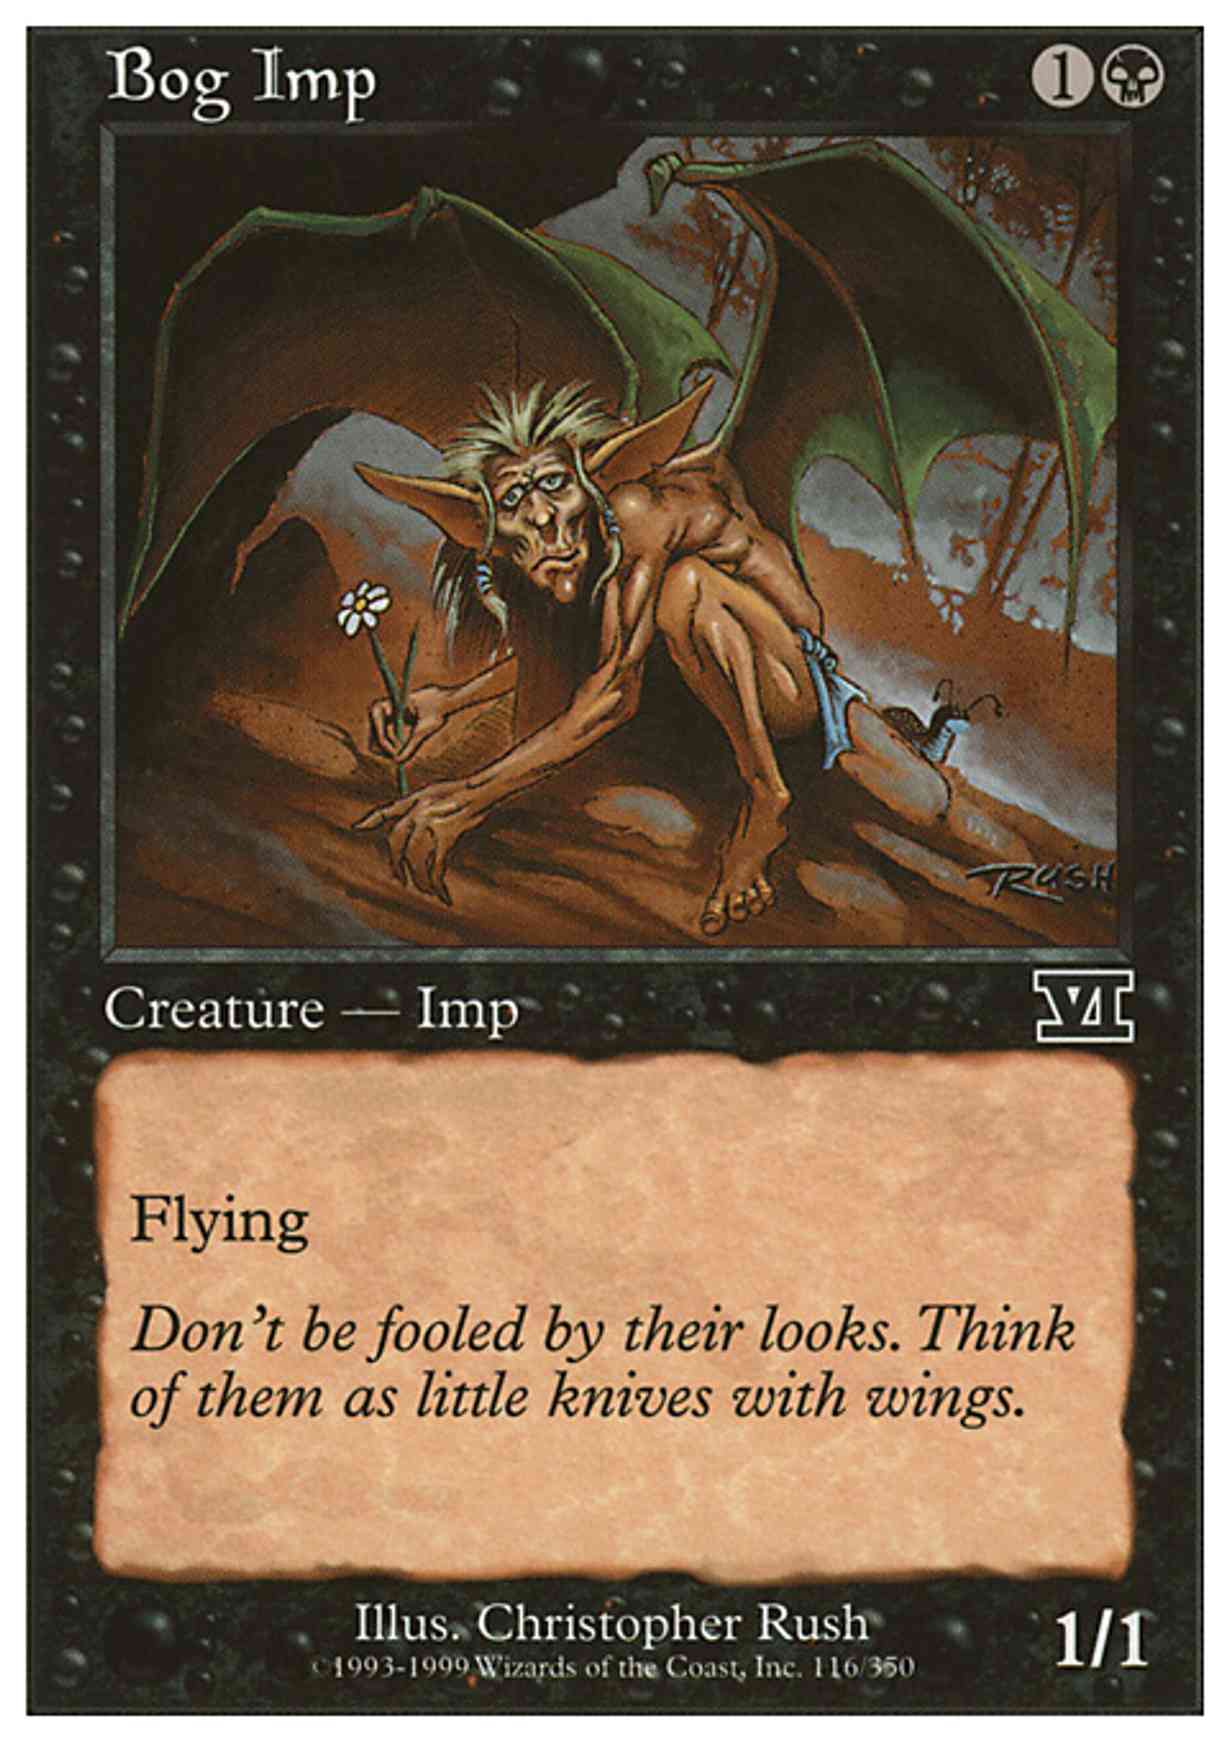 Bog Imp magic card front